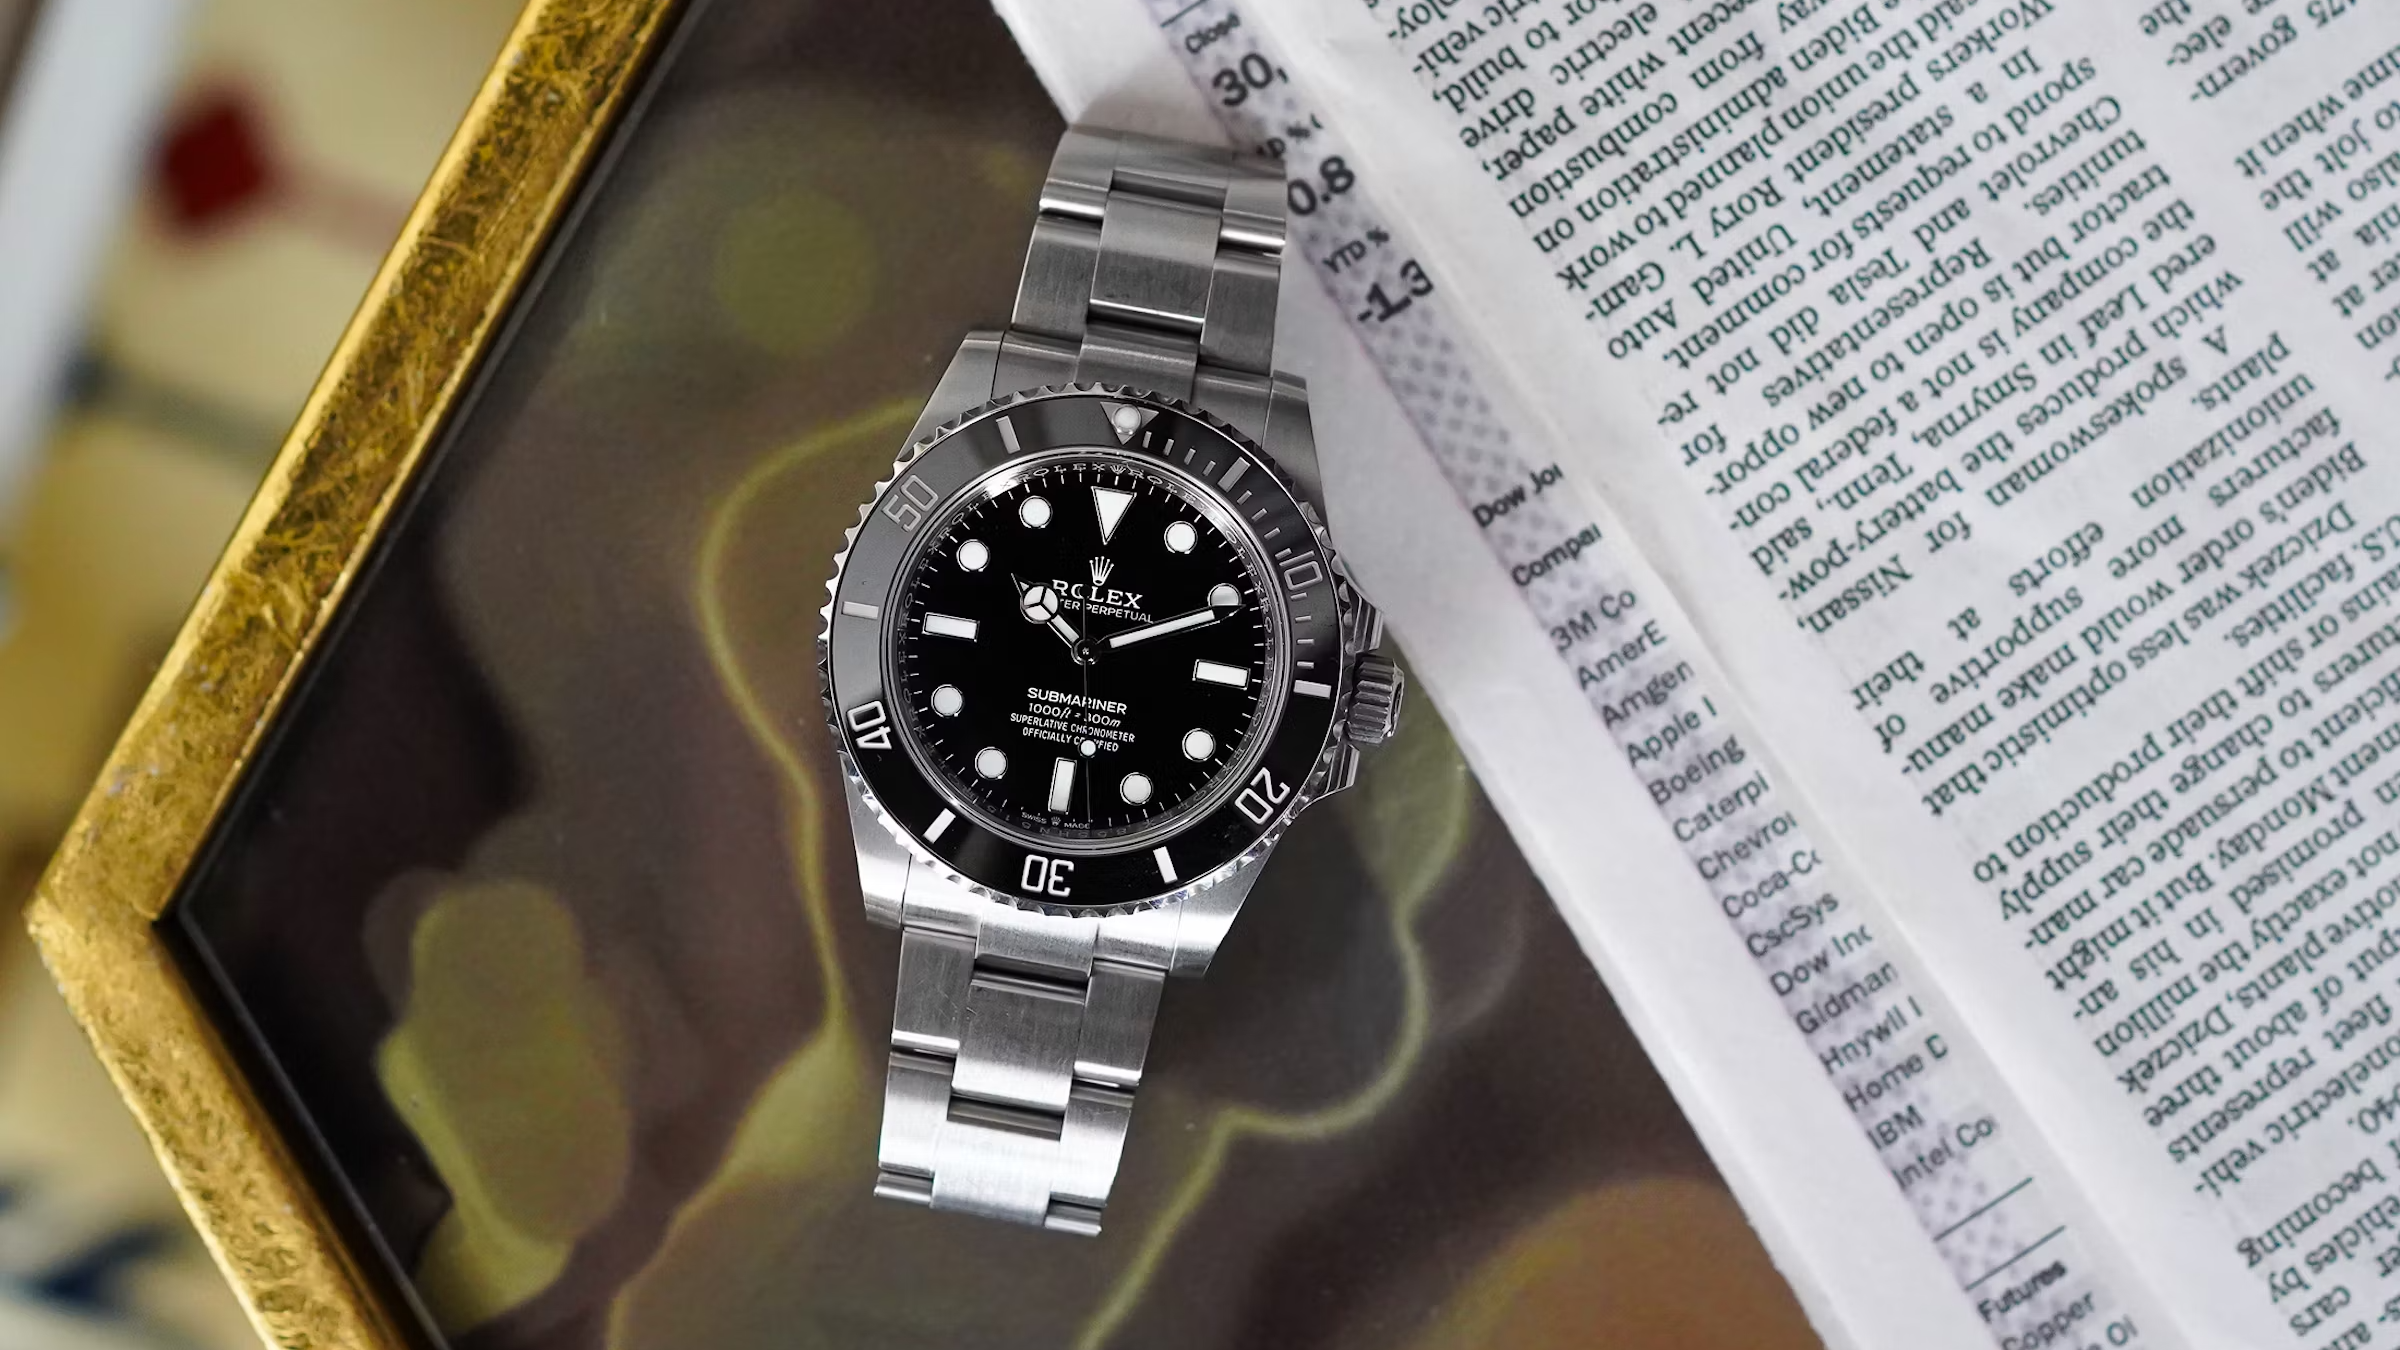 Perfect watch enterprise - New arrival submarine watch …! 👍🏻👍🏻￼￼ |  Facebook